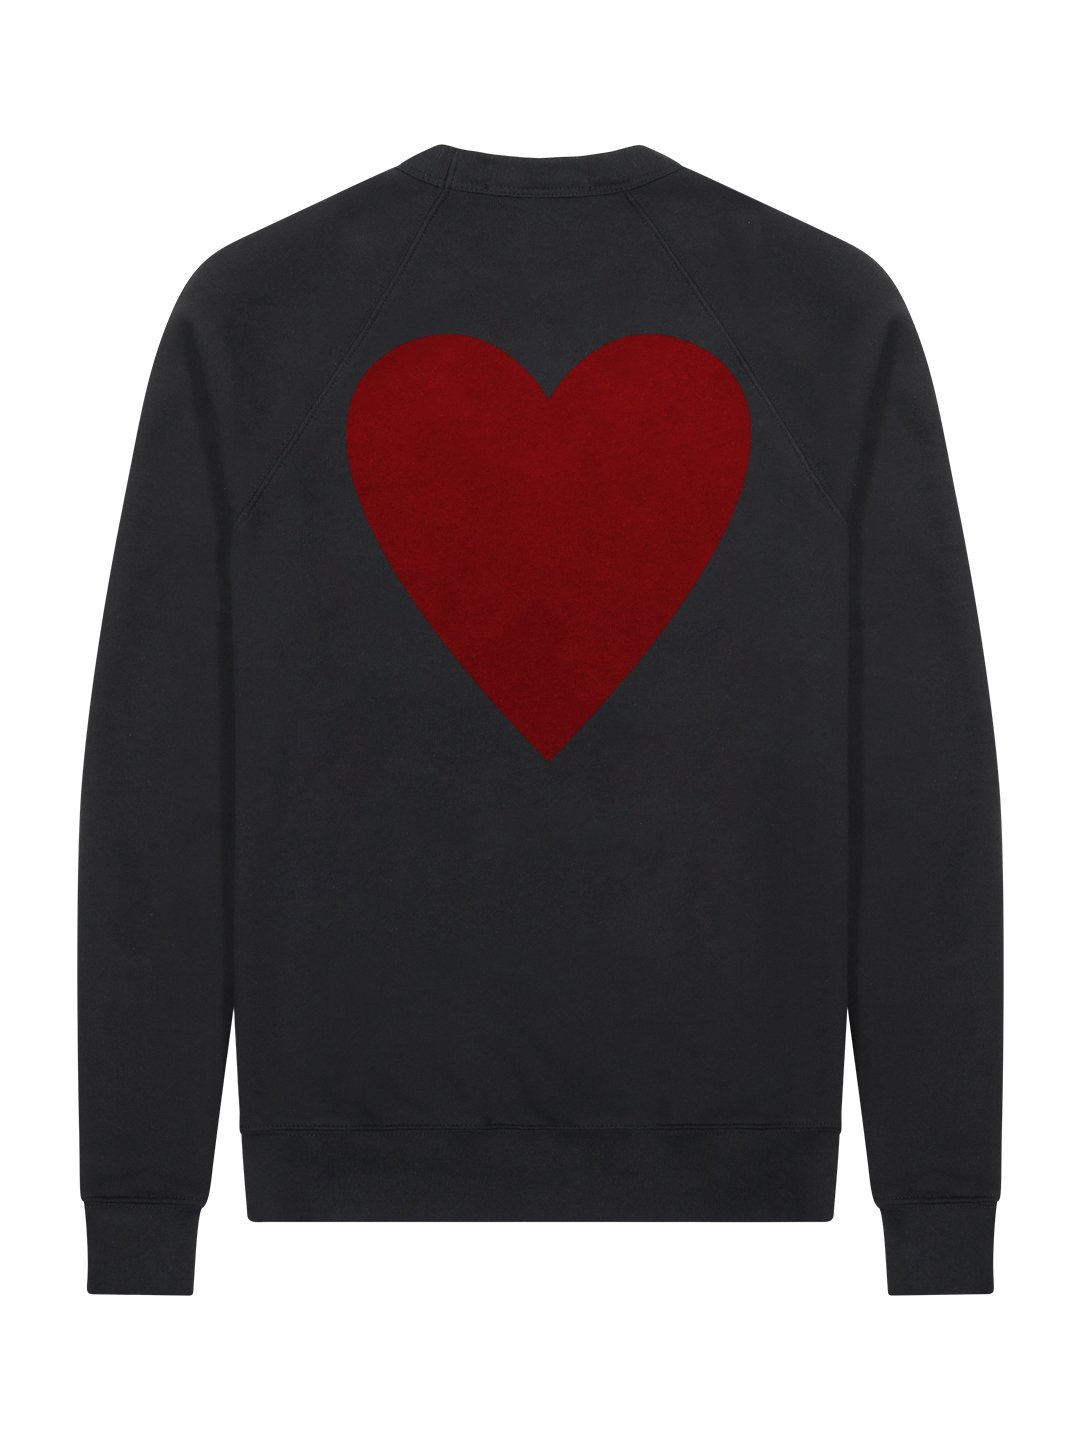 Love Crewneck Sweatshirt Black